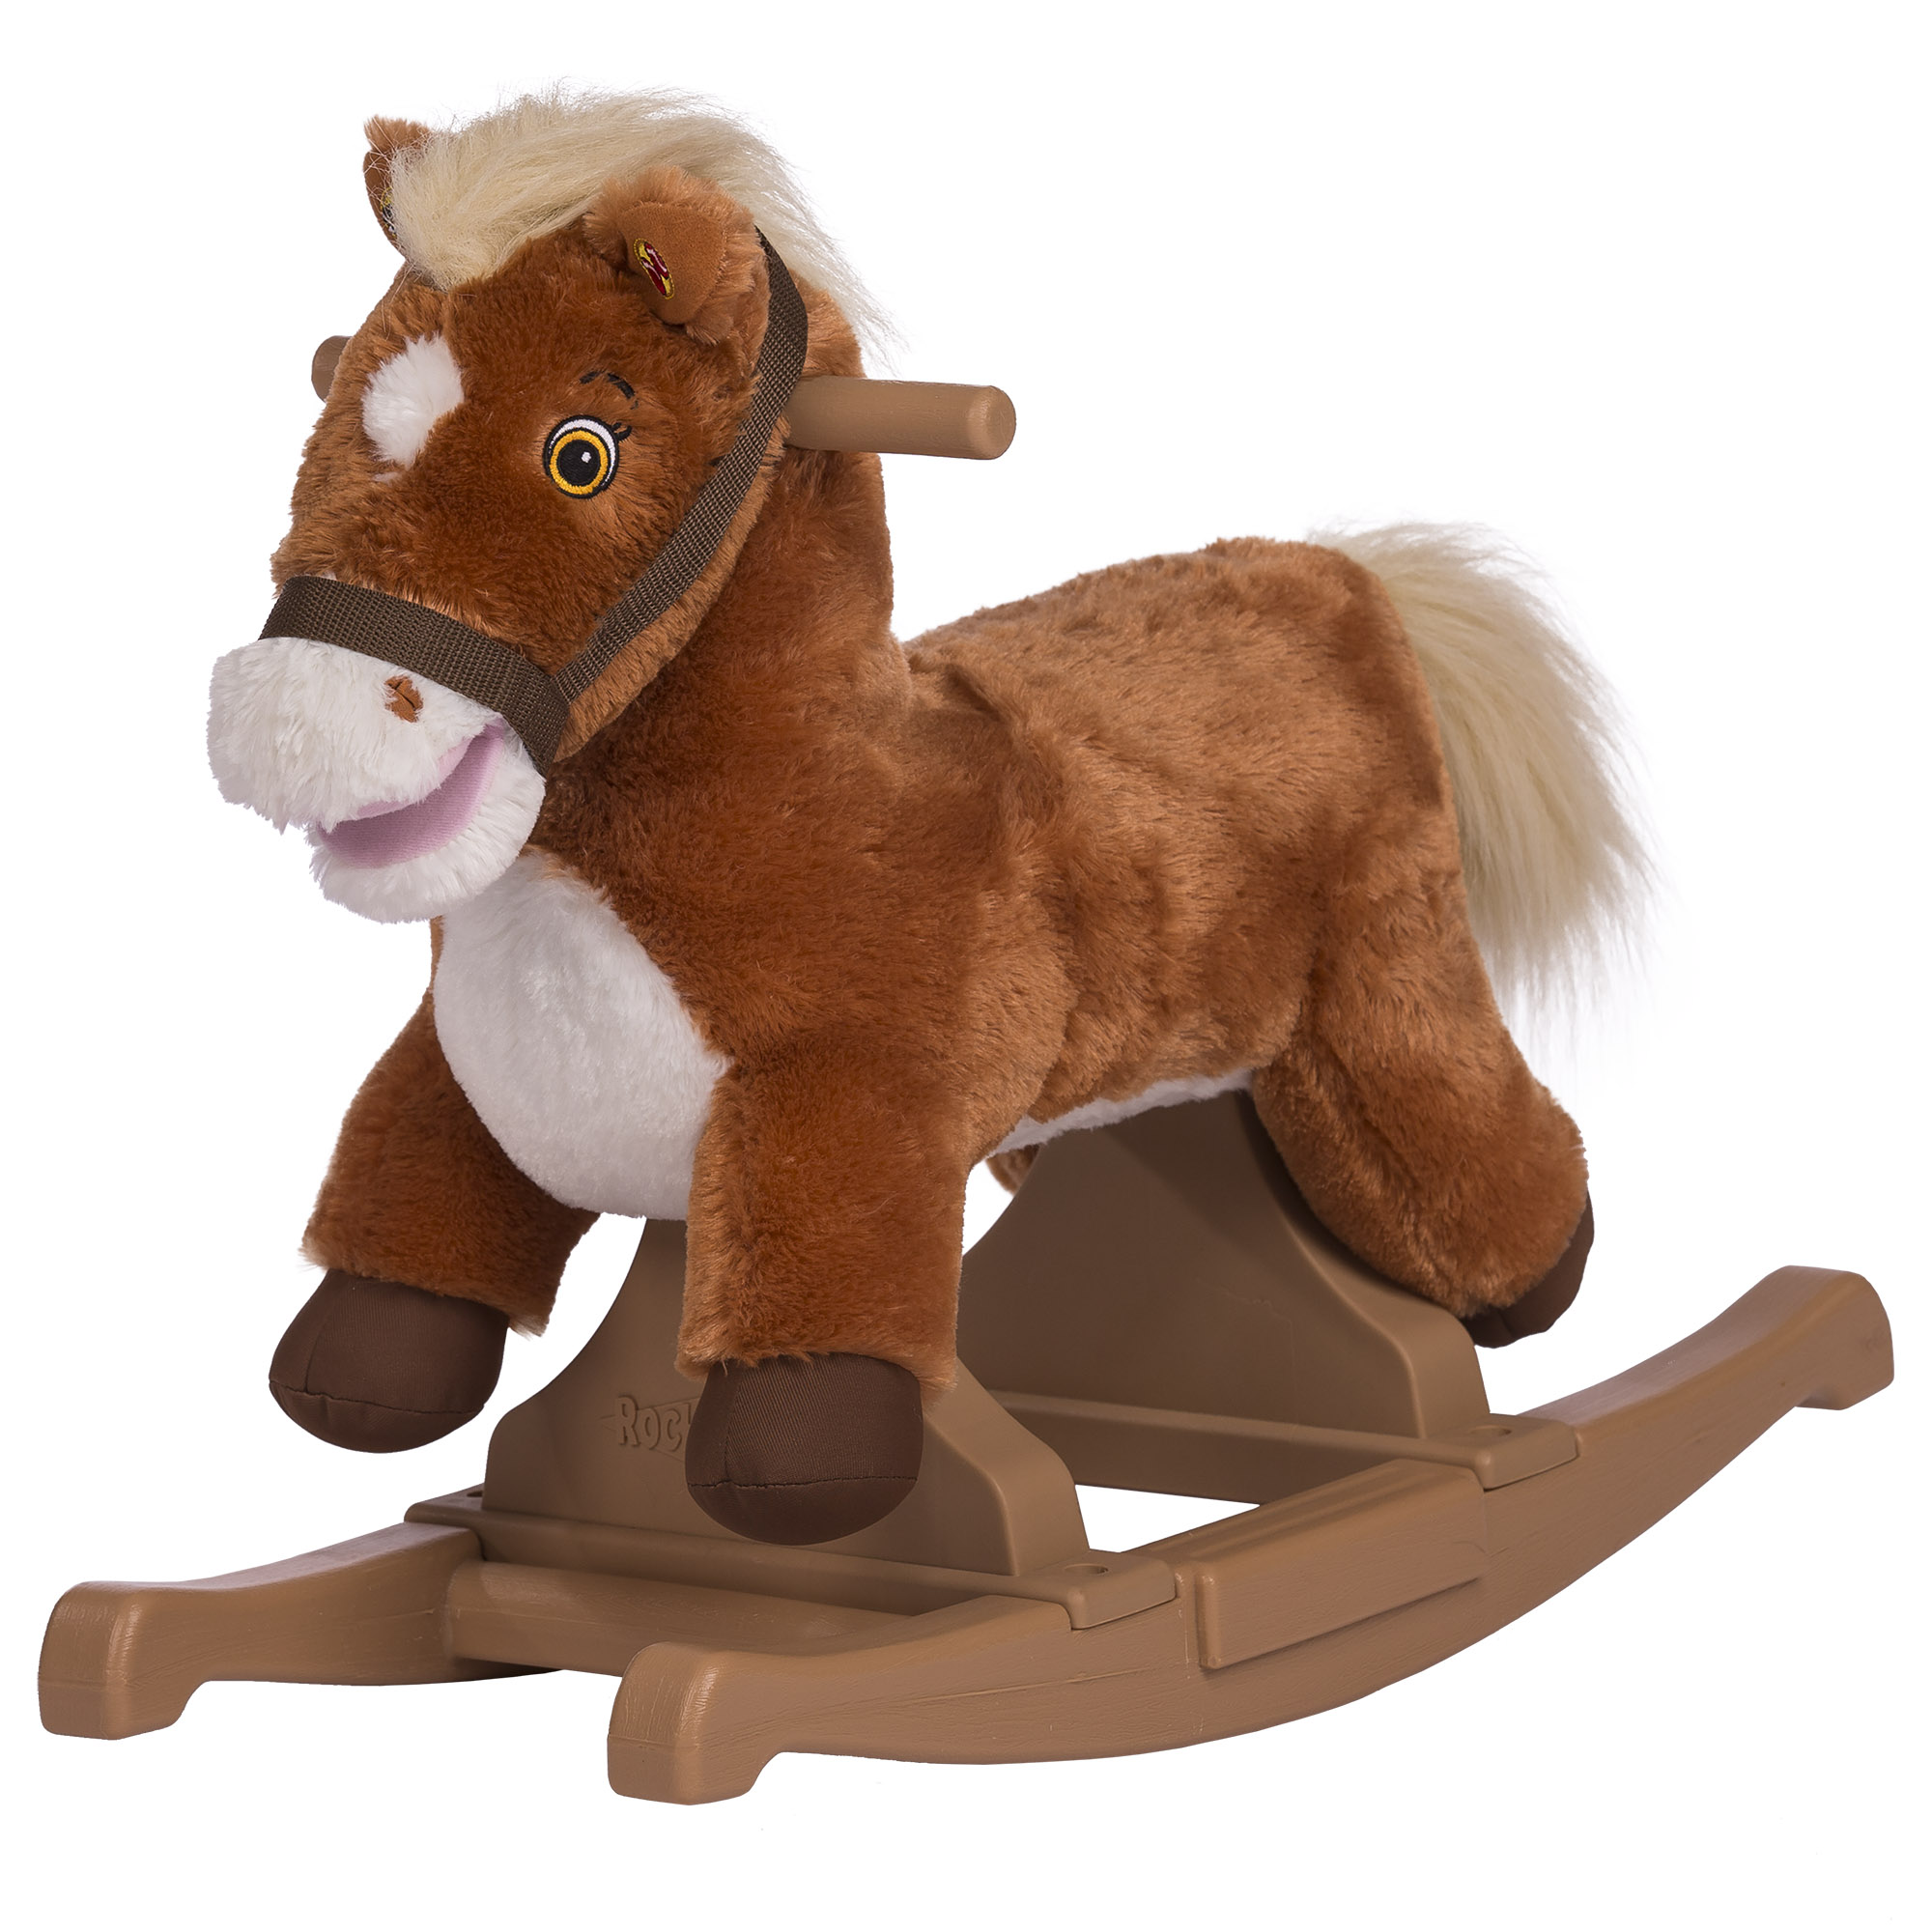 Rockin' Rider Pony Rocker Animated Plush Rocking Horse, Brown - image 1 of 6